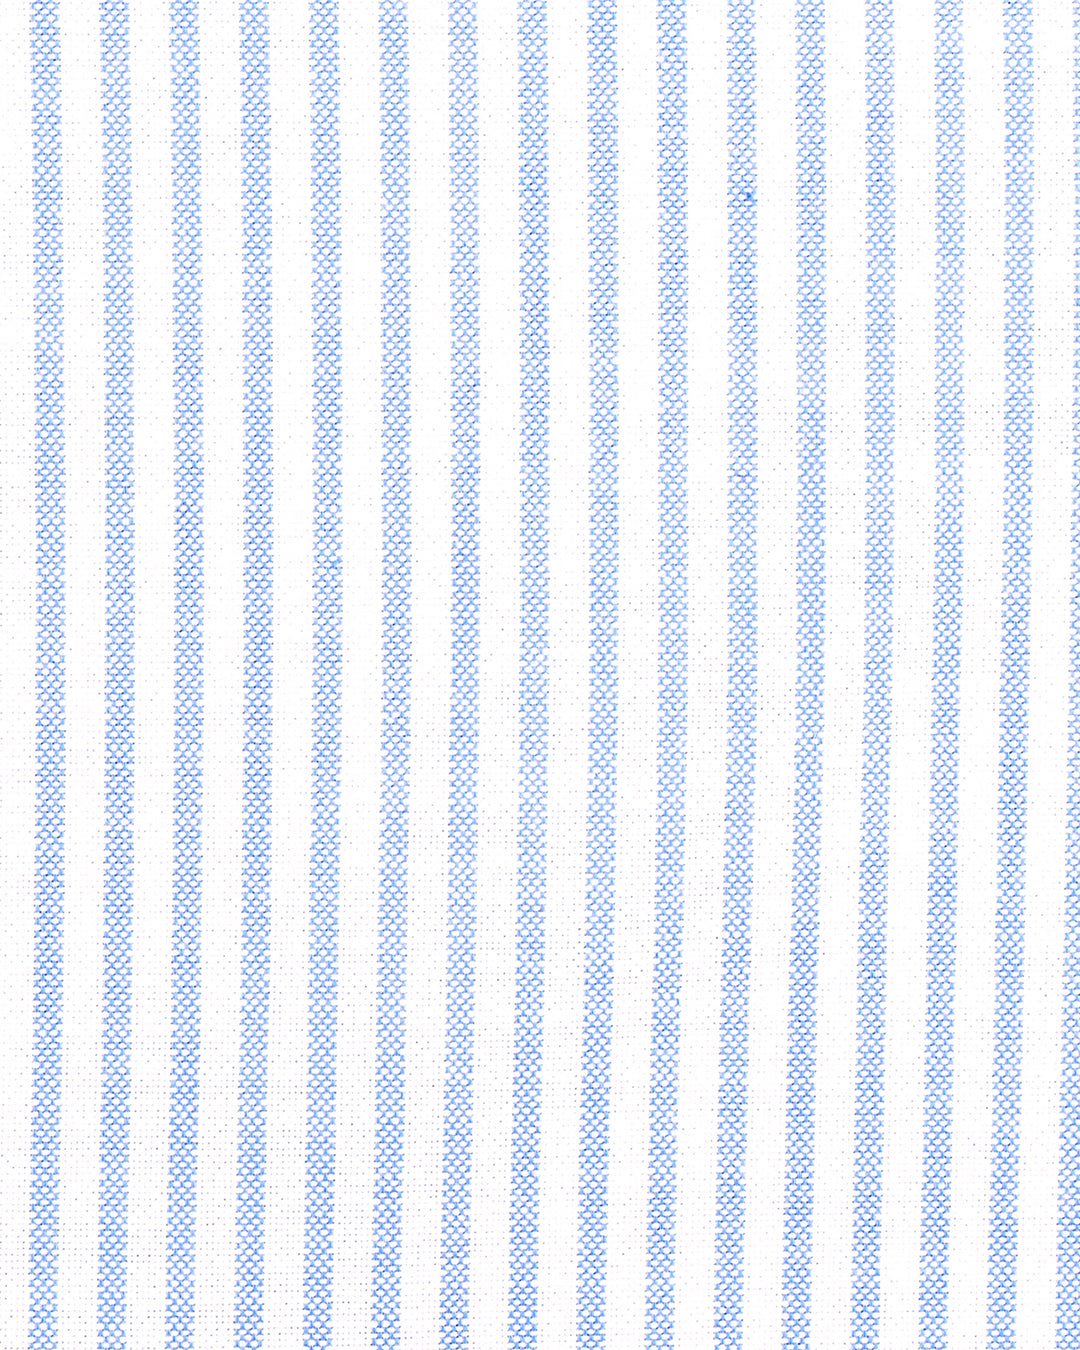 Blue Stripes On Textured White Shirt